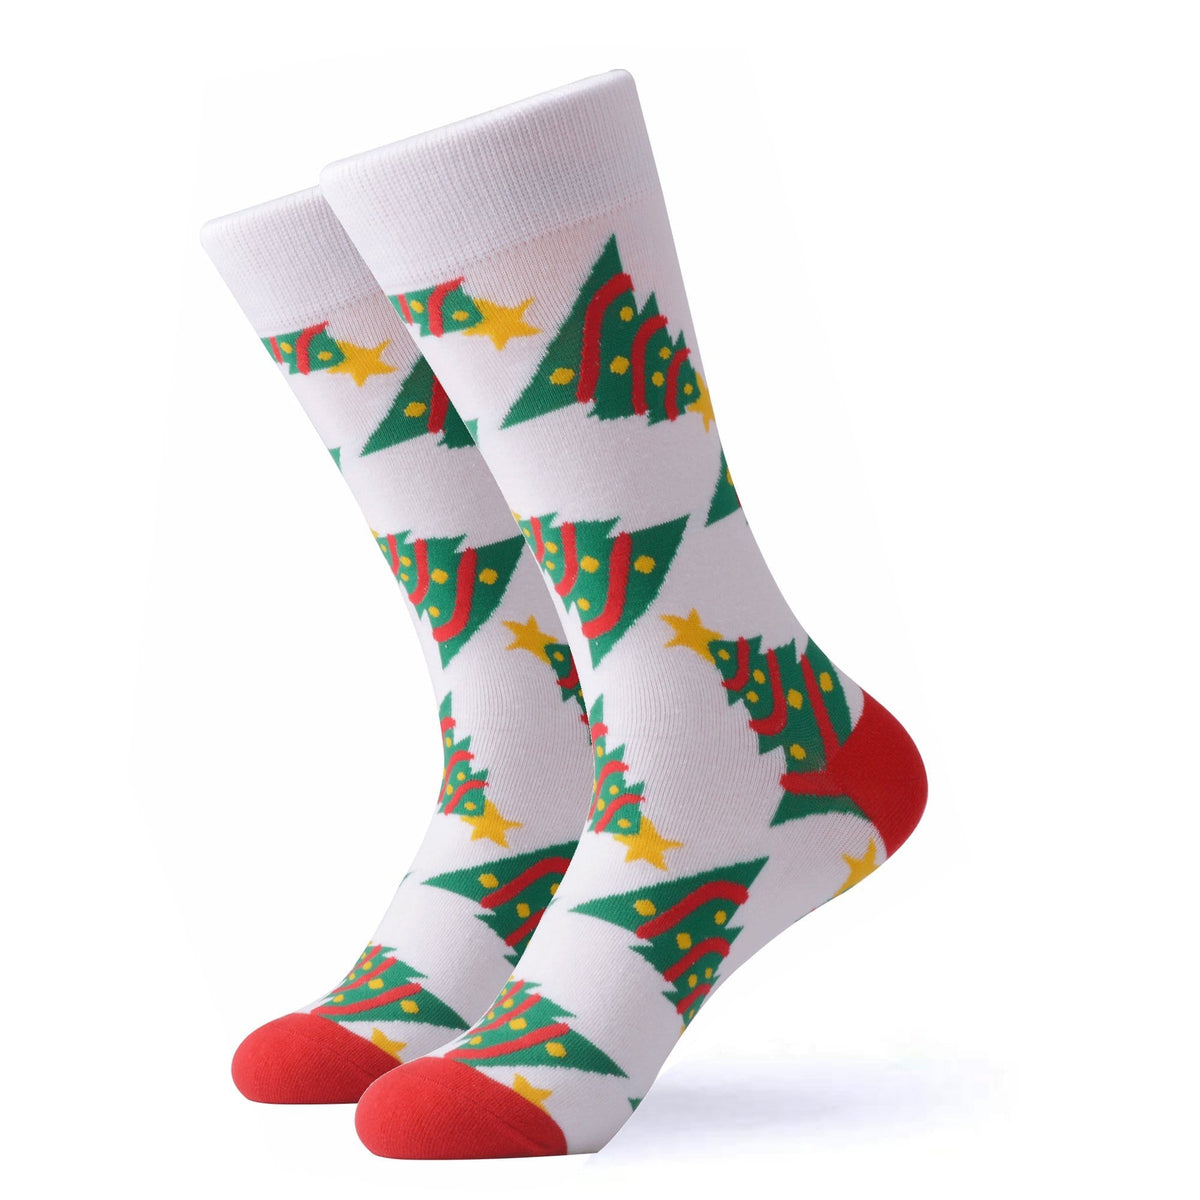 The Decorated Christmas Tree Socks – WestSocks